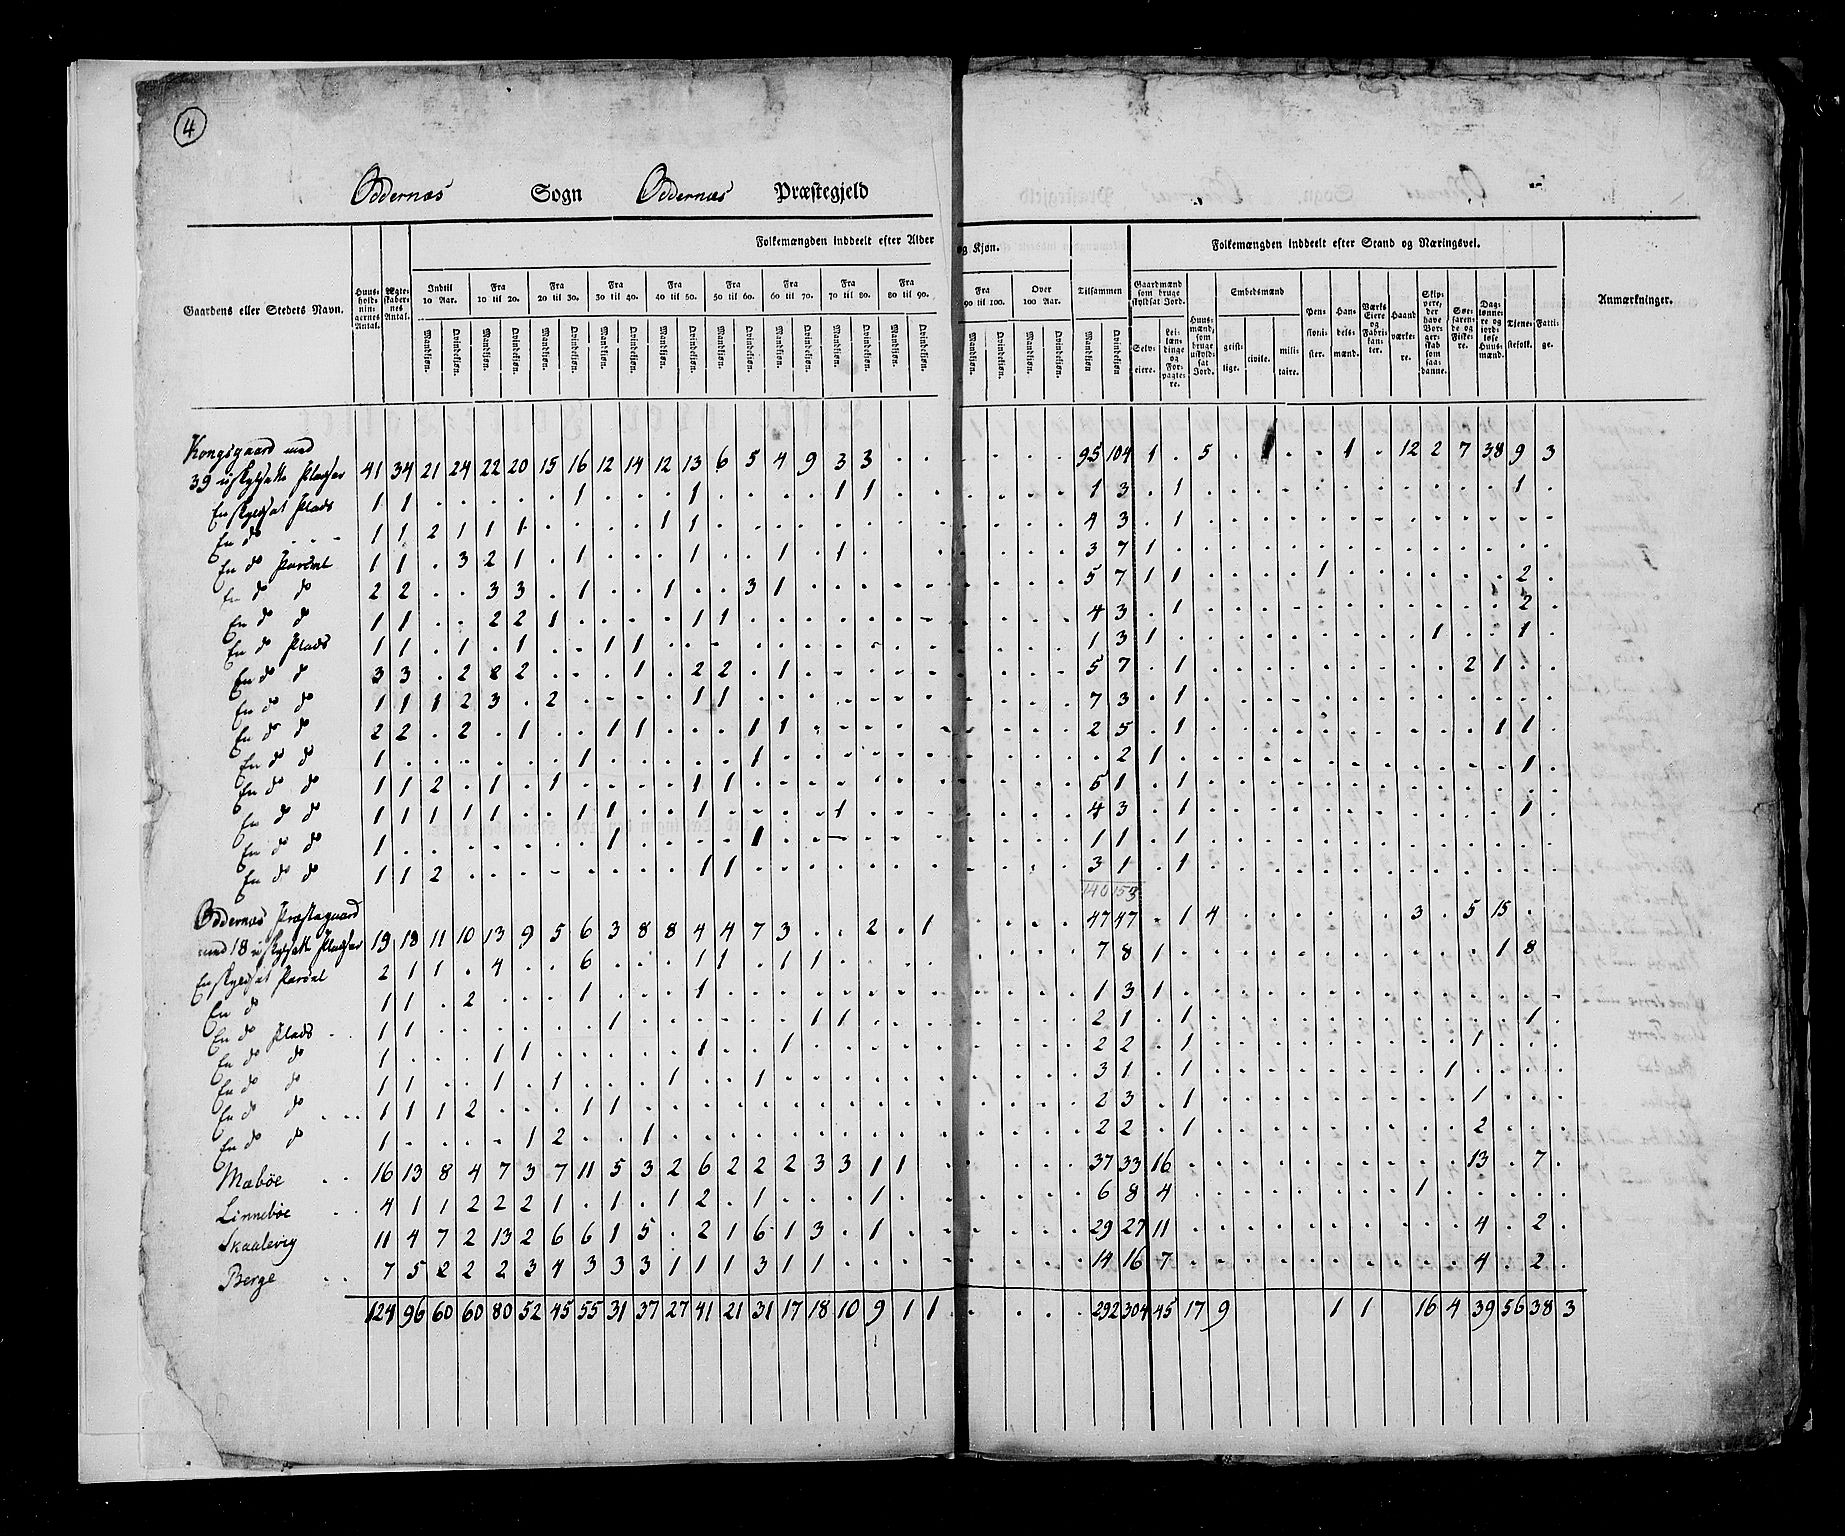 RA, Census 1825, vol. 11: Lister og Mandal amt, 1825, p. 4